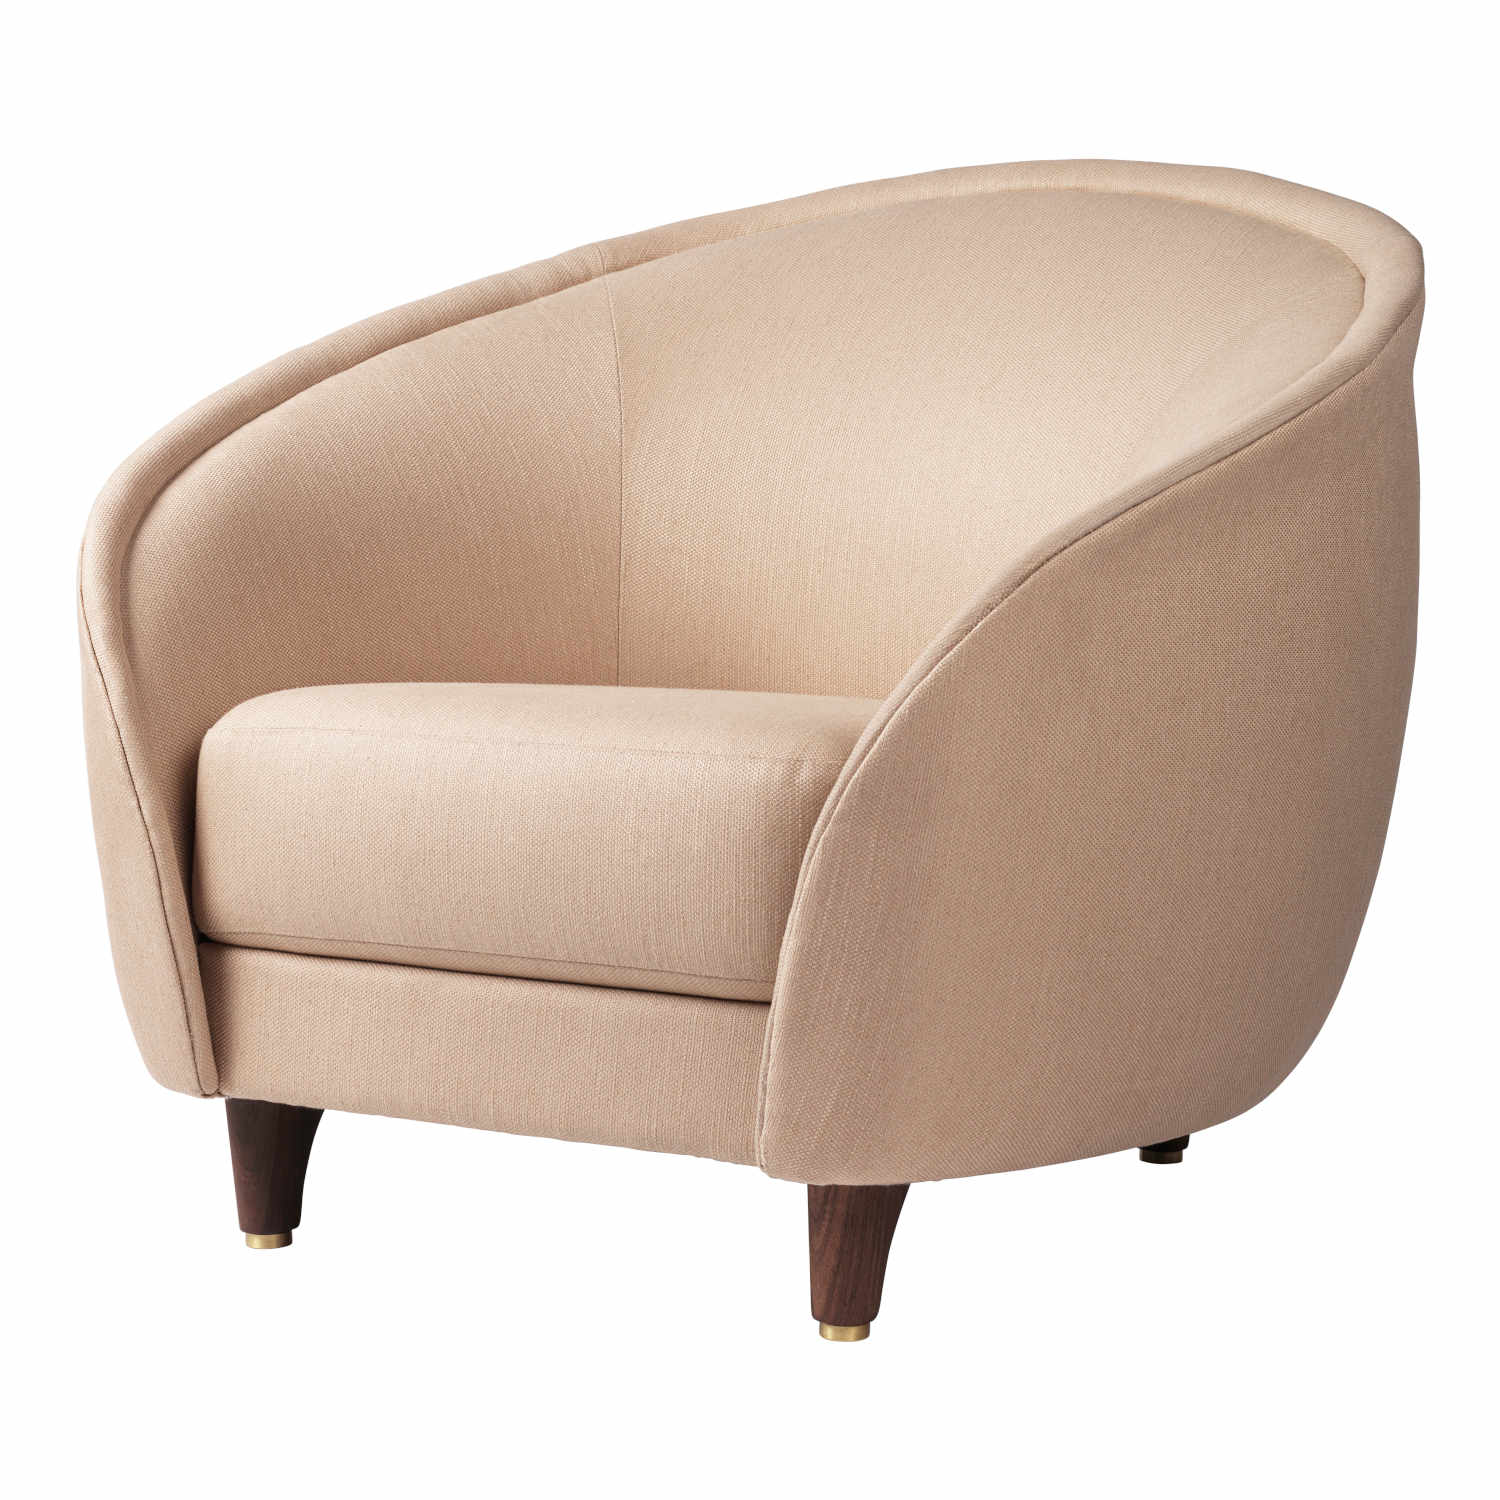 Revers Lounge Chair Sessel, Bezug kvadrat remix 0692 stoff, Untergestell Wood Base american walnut (geölt) von GUBI